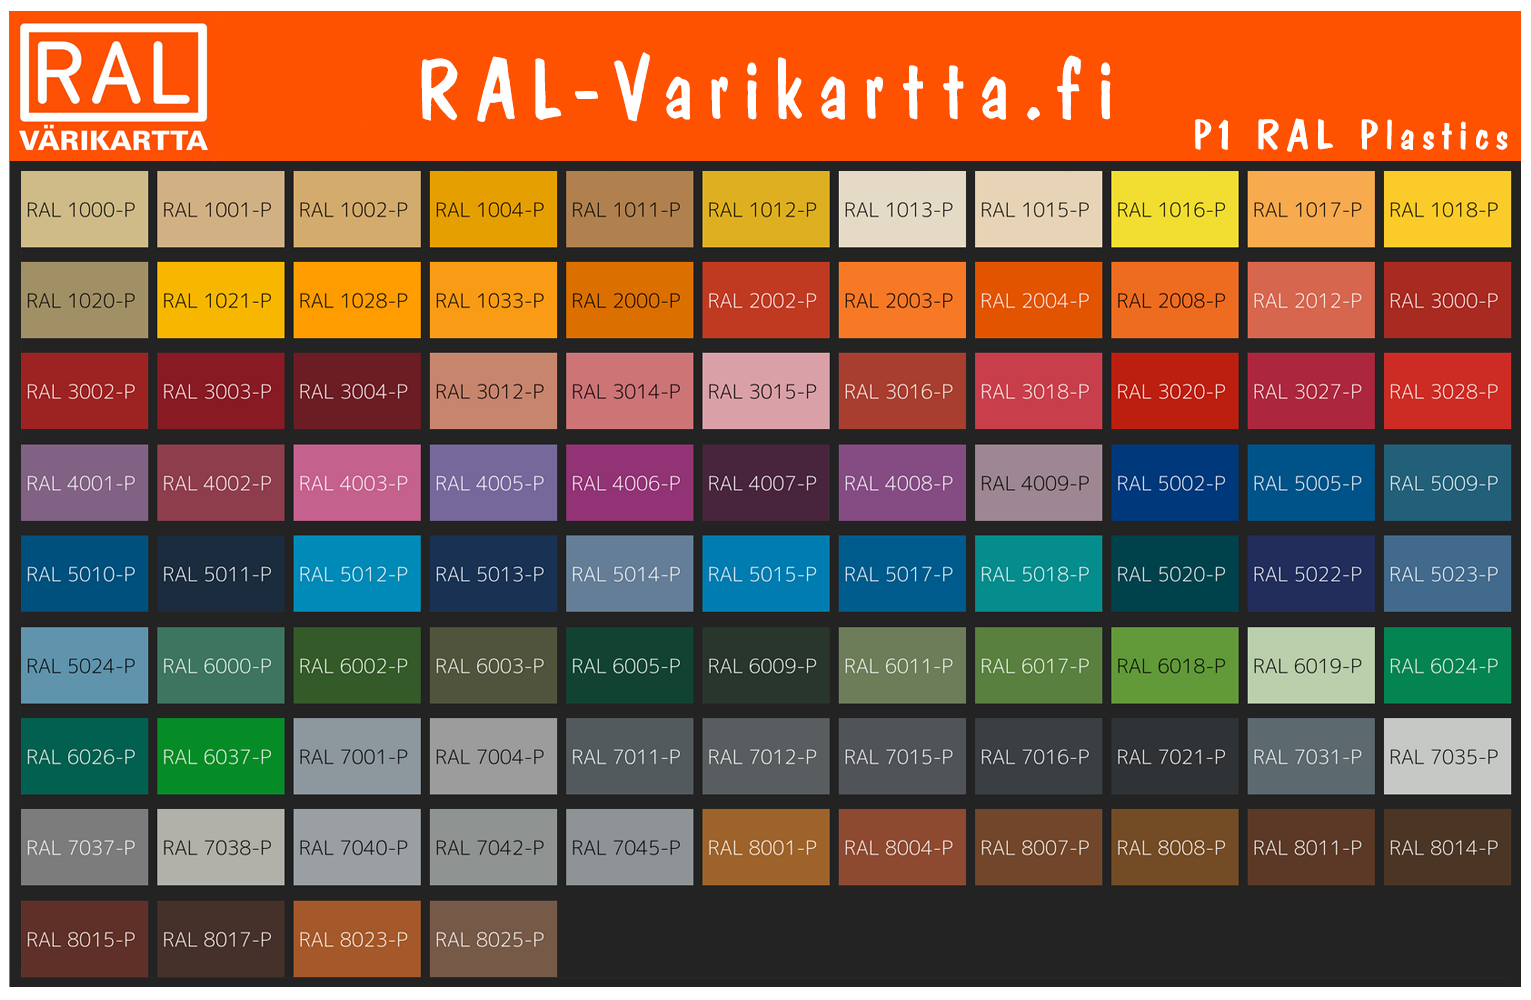 RAL Plastics P1 Colour chart